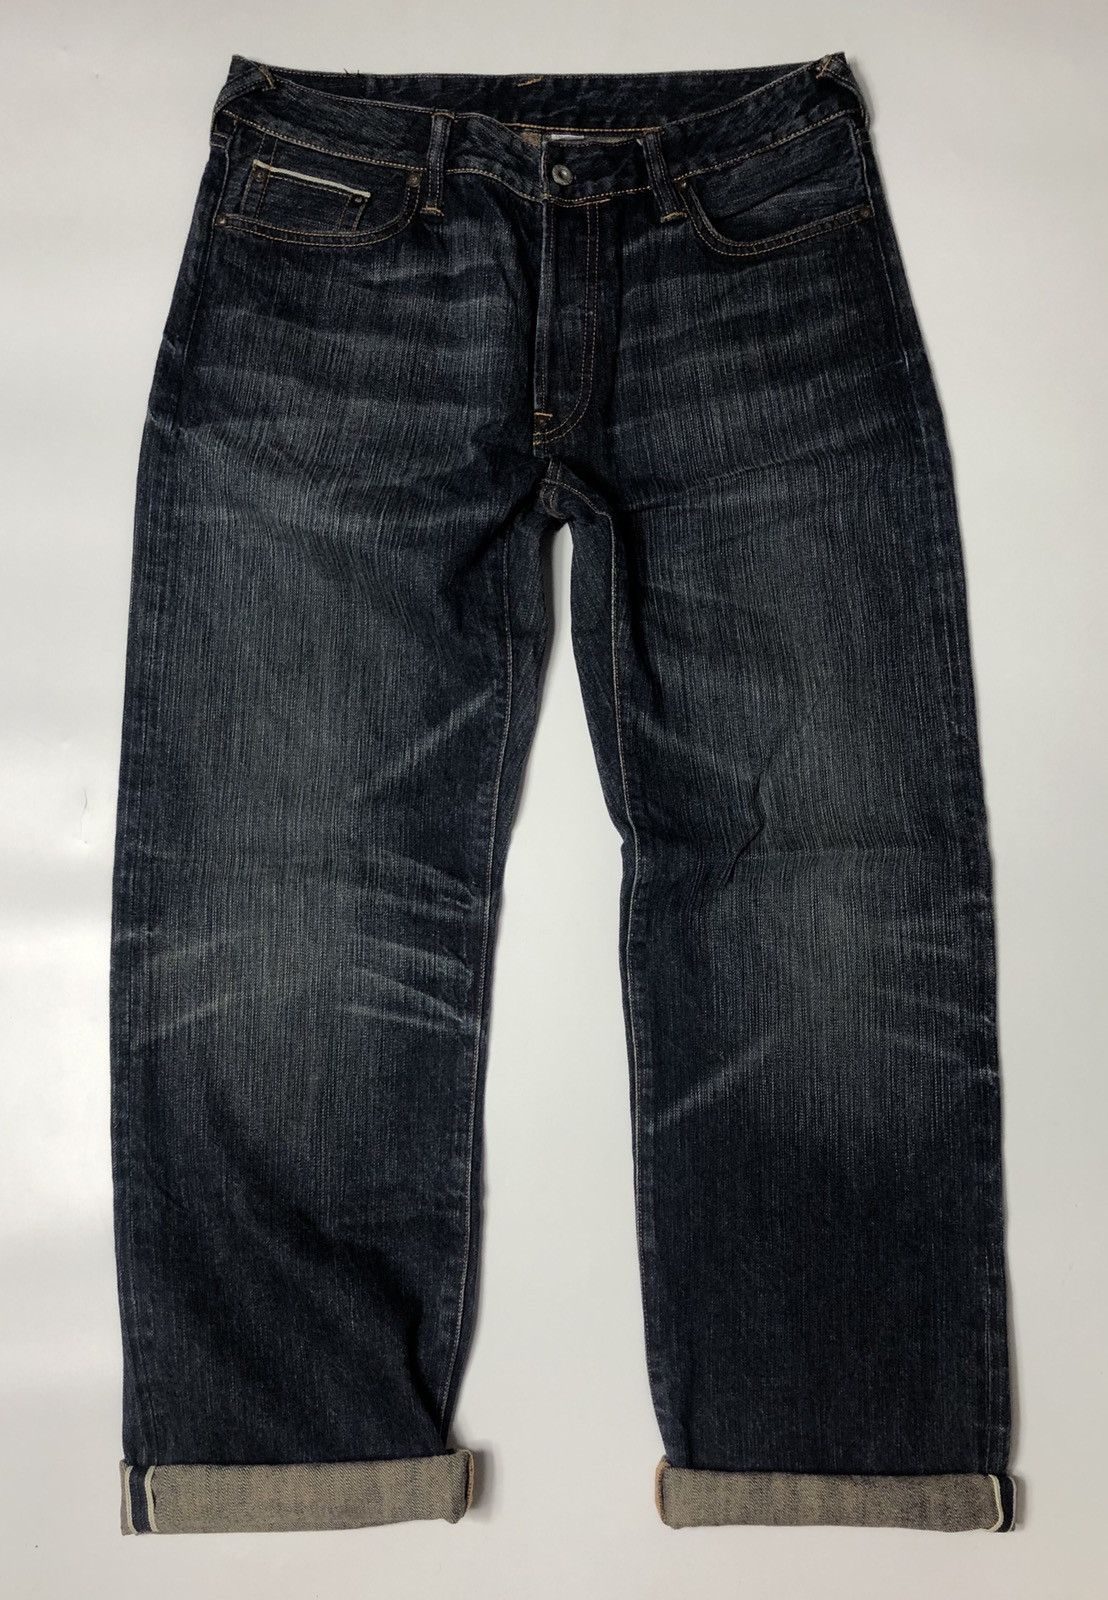 Evisu evisu selvedge jeans Size US 34 / EU 50 - 3 Thumbnail